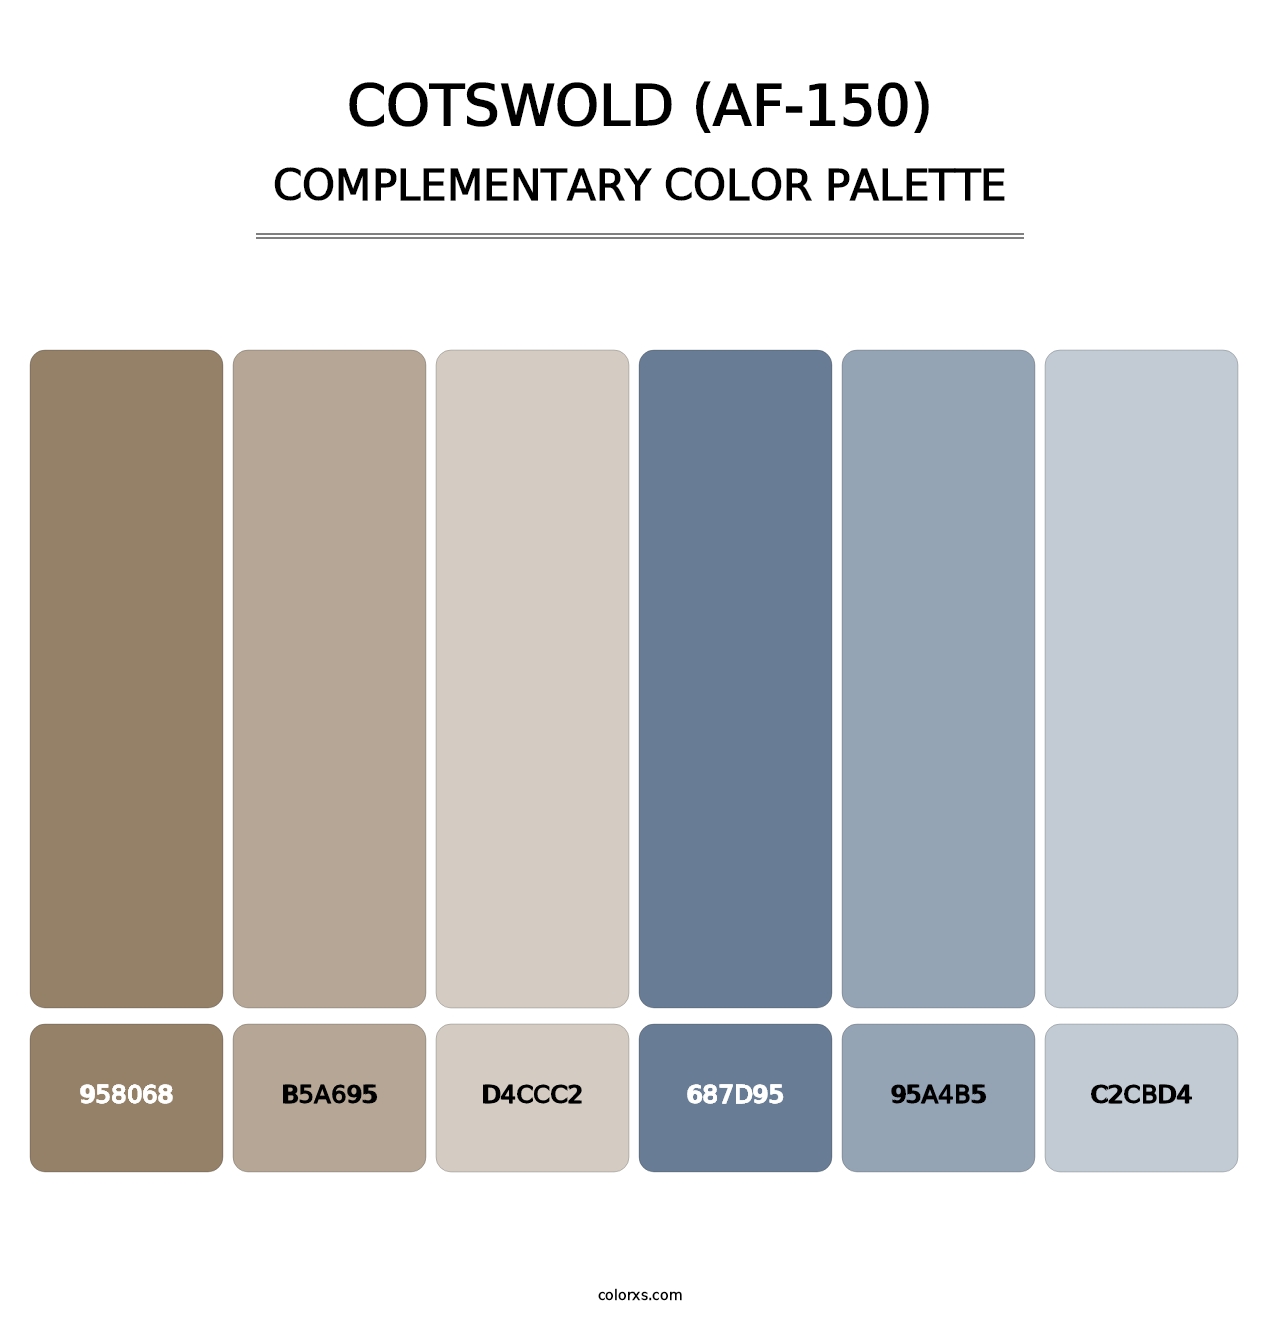 Cotswold (AF-150) - Complementary Color Palette